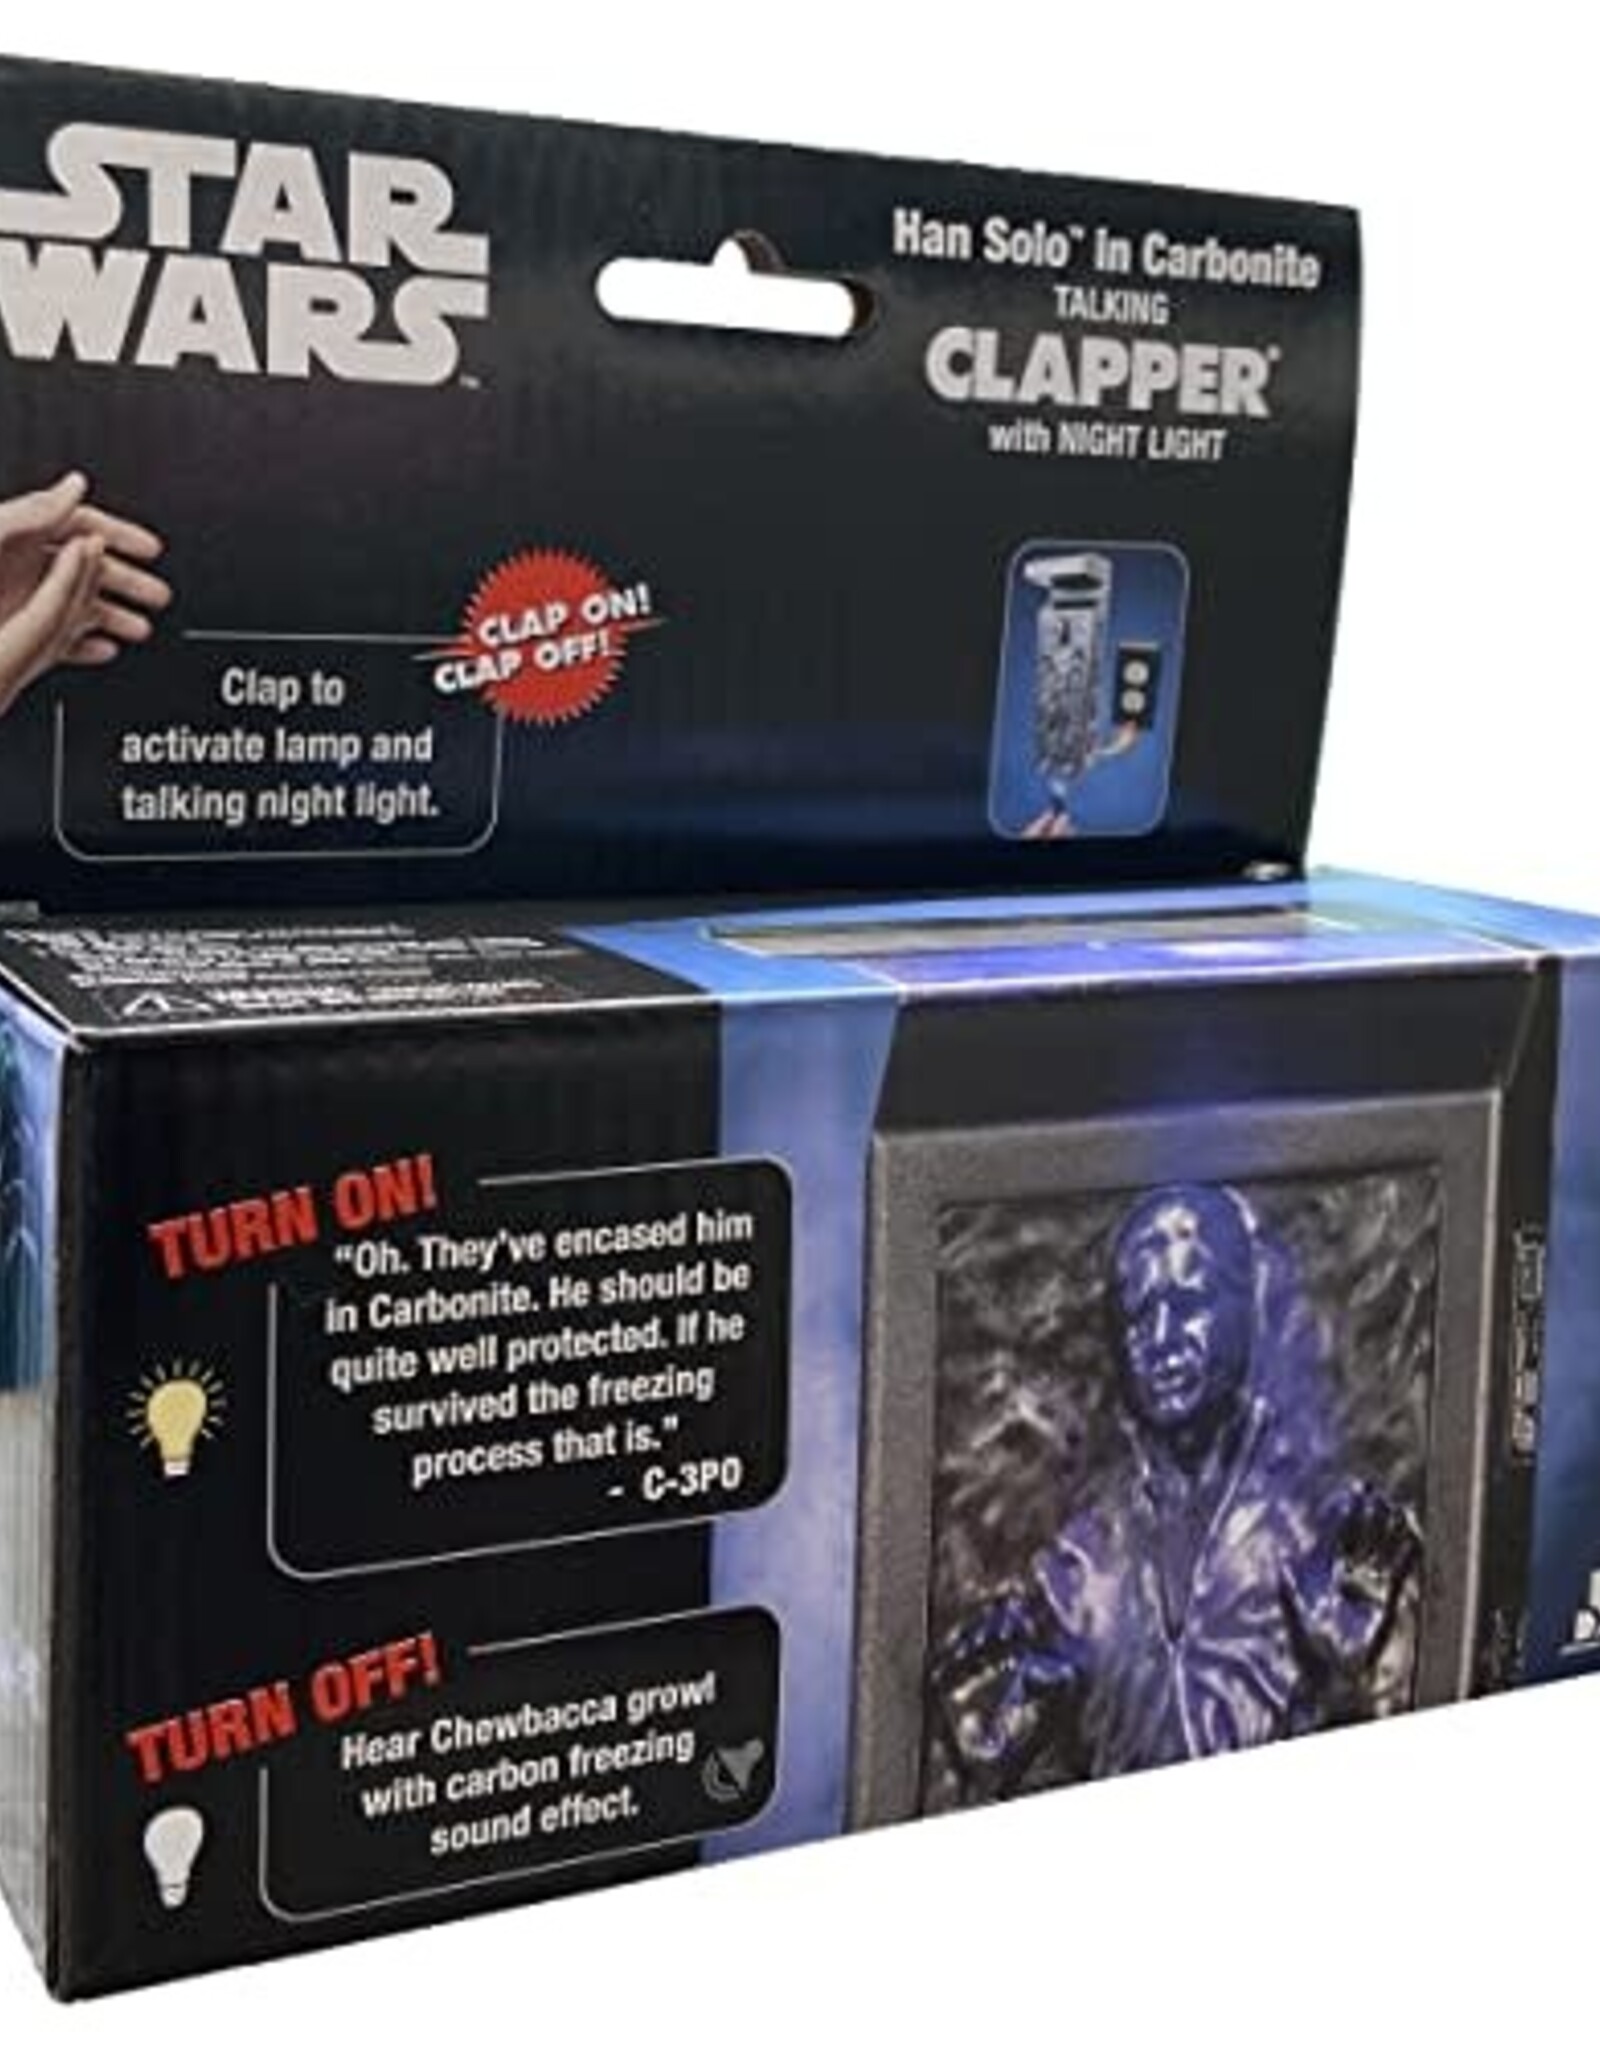 Star Wars-Han Solo Carbonite Clapper